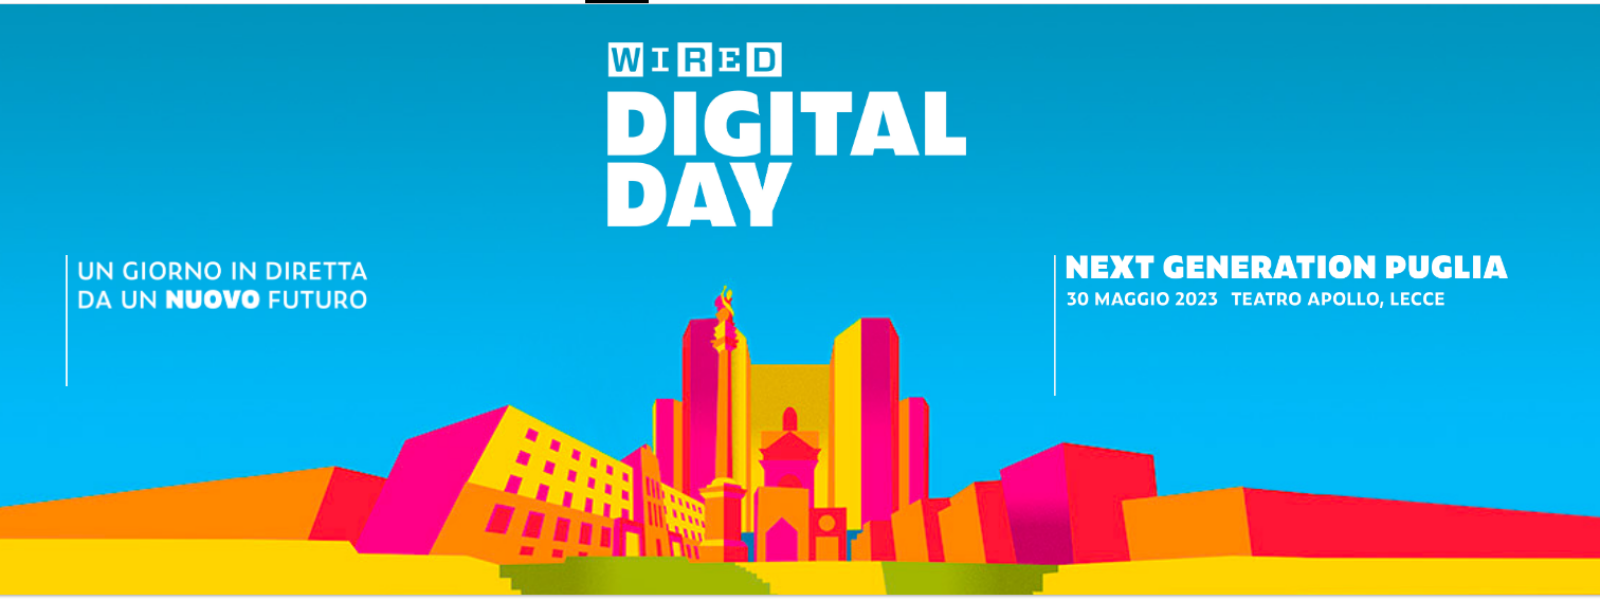 Wired Digital Day Puglia